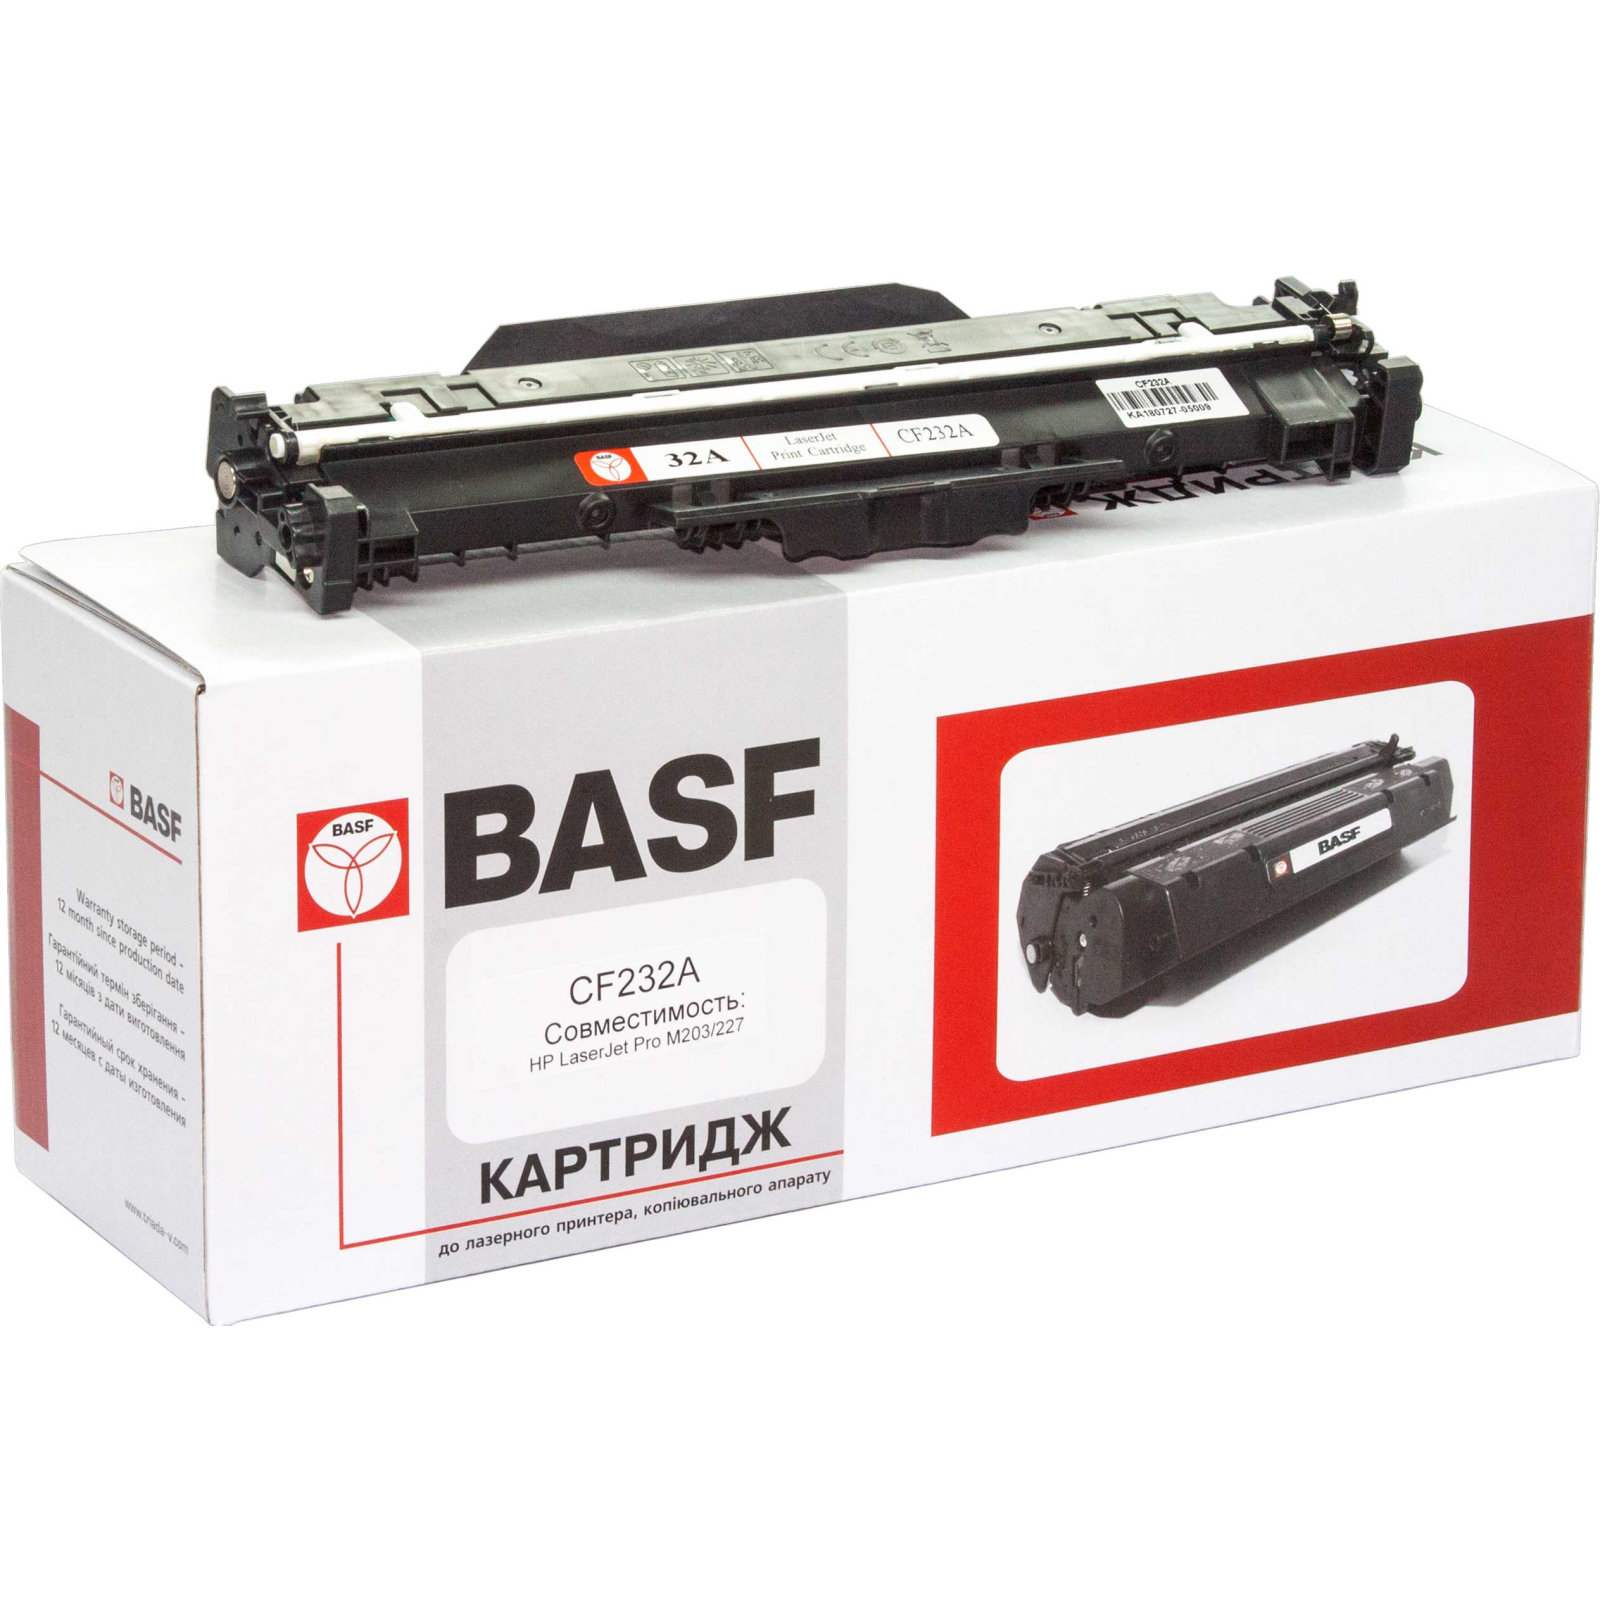 Драм картридж BASF HP LaserJet Pro M203/227 (DR-CF232A) изображение 2